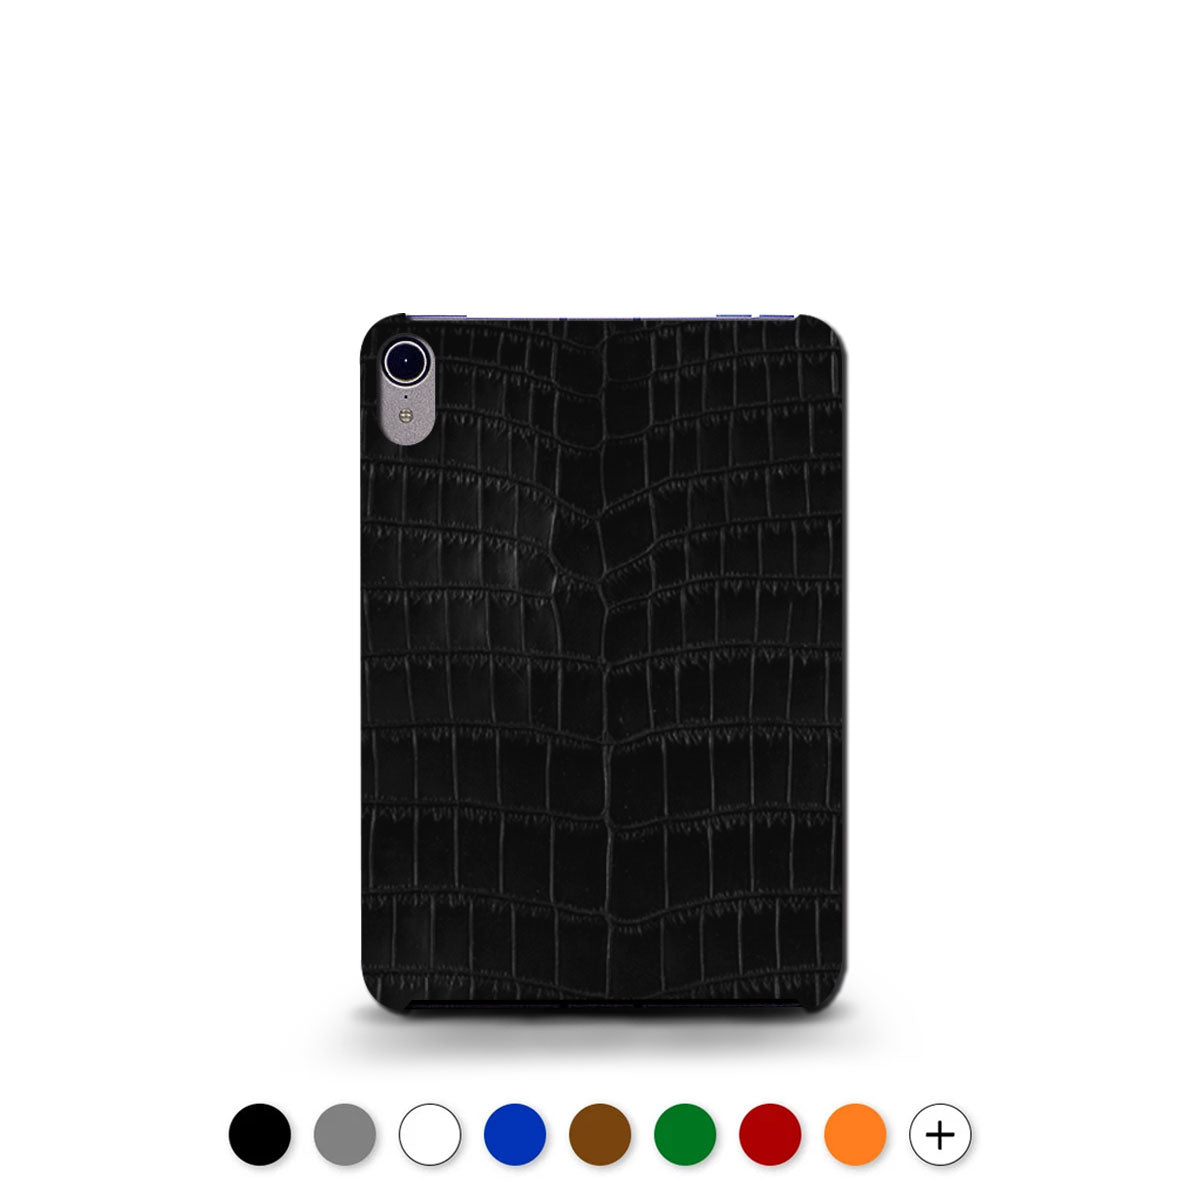 Leather iPad case / cover - iPad Mini ( 6th generation ) - Genuine alligator